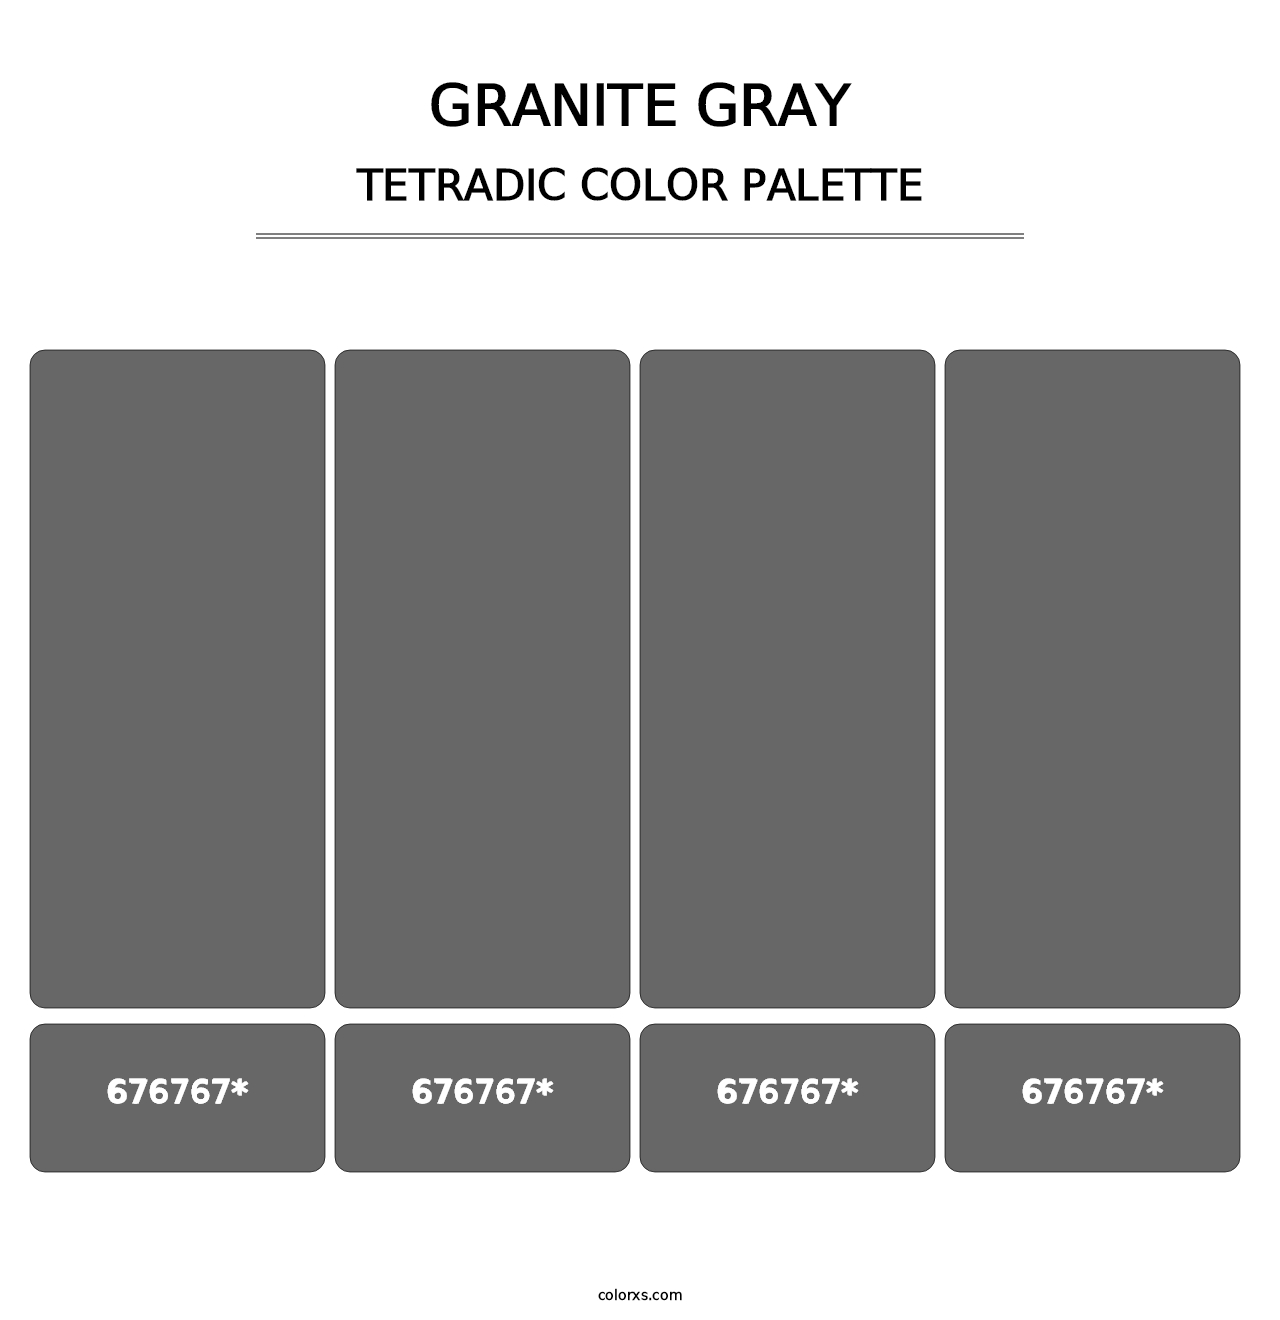 Granite Gray - Tetradic Color Palette